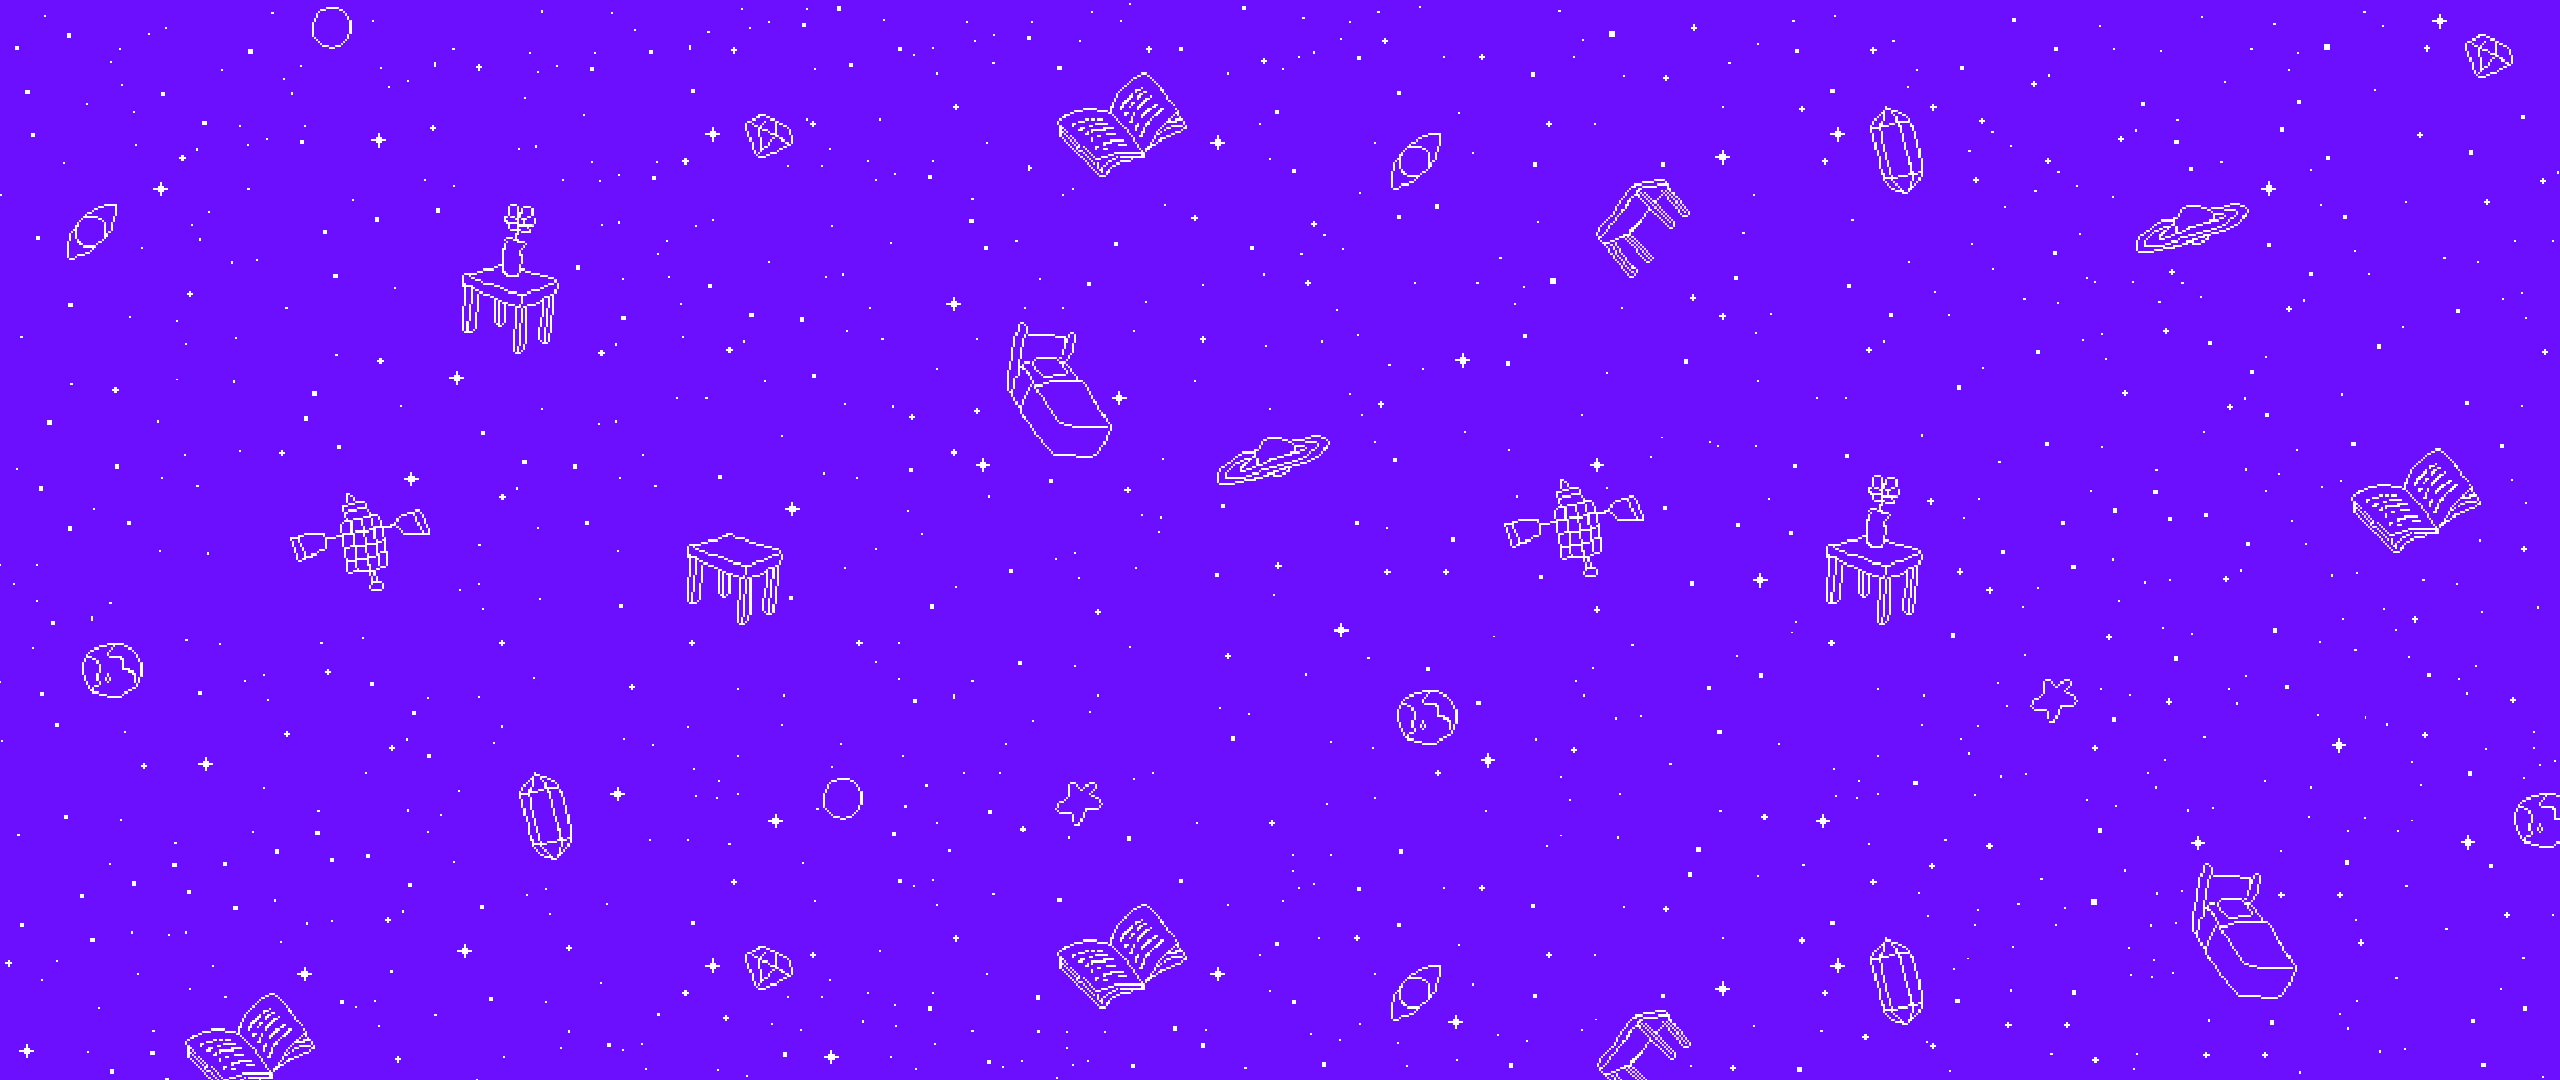 Omori Pixel Art Ultrawide Universe Sky Stars Planet Purple Background OMOCAT 2560x1080